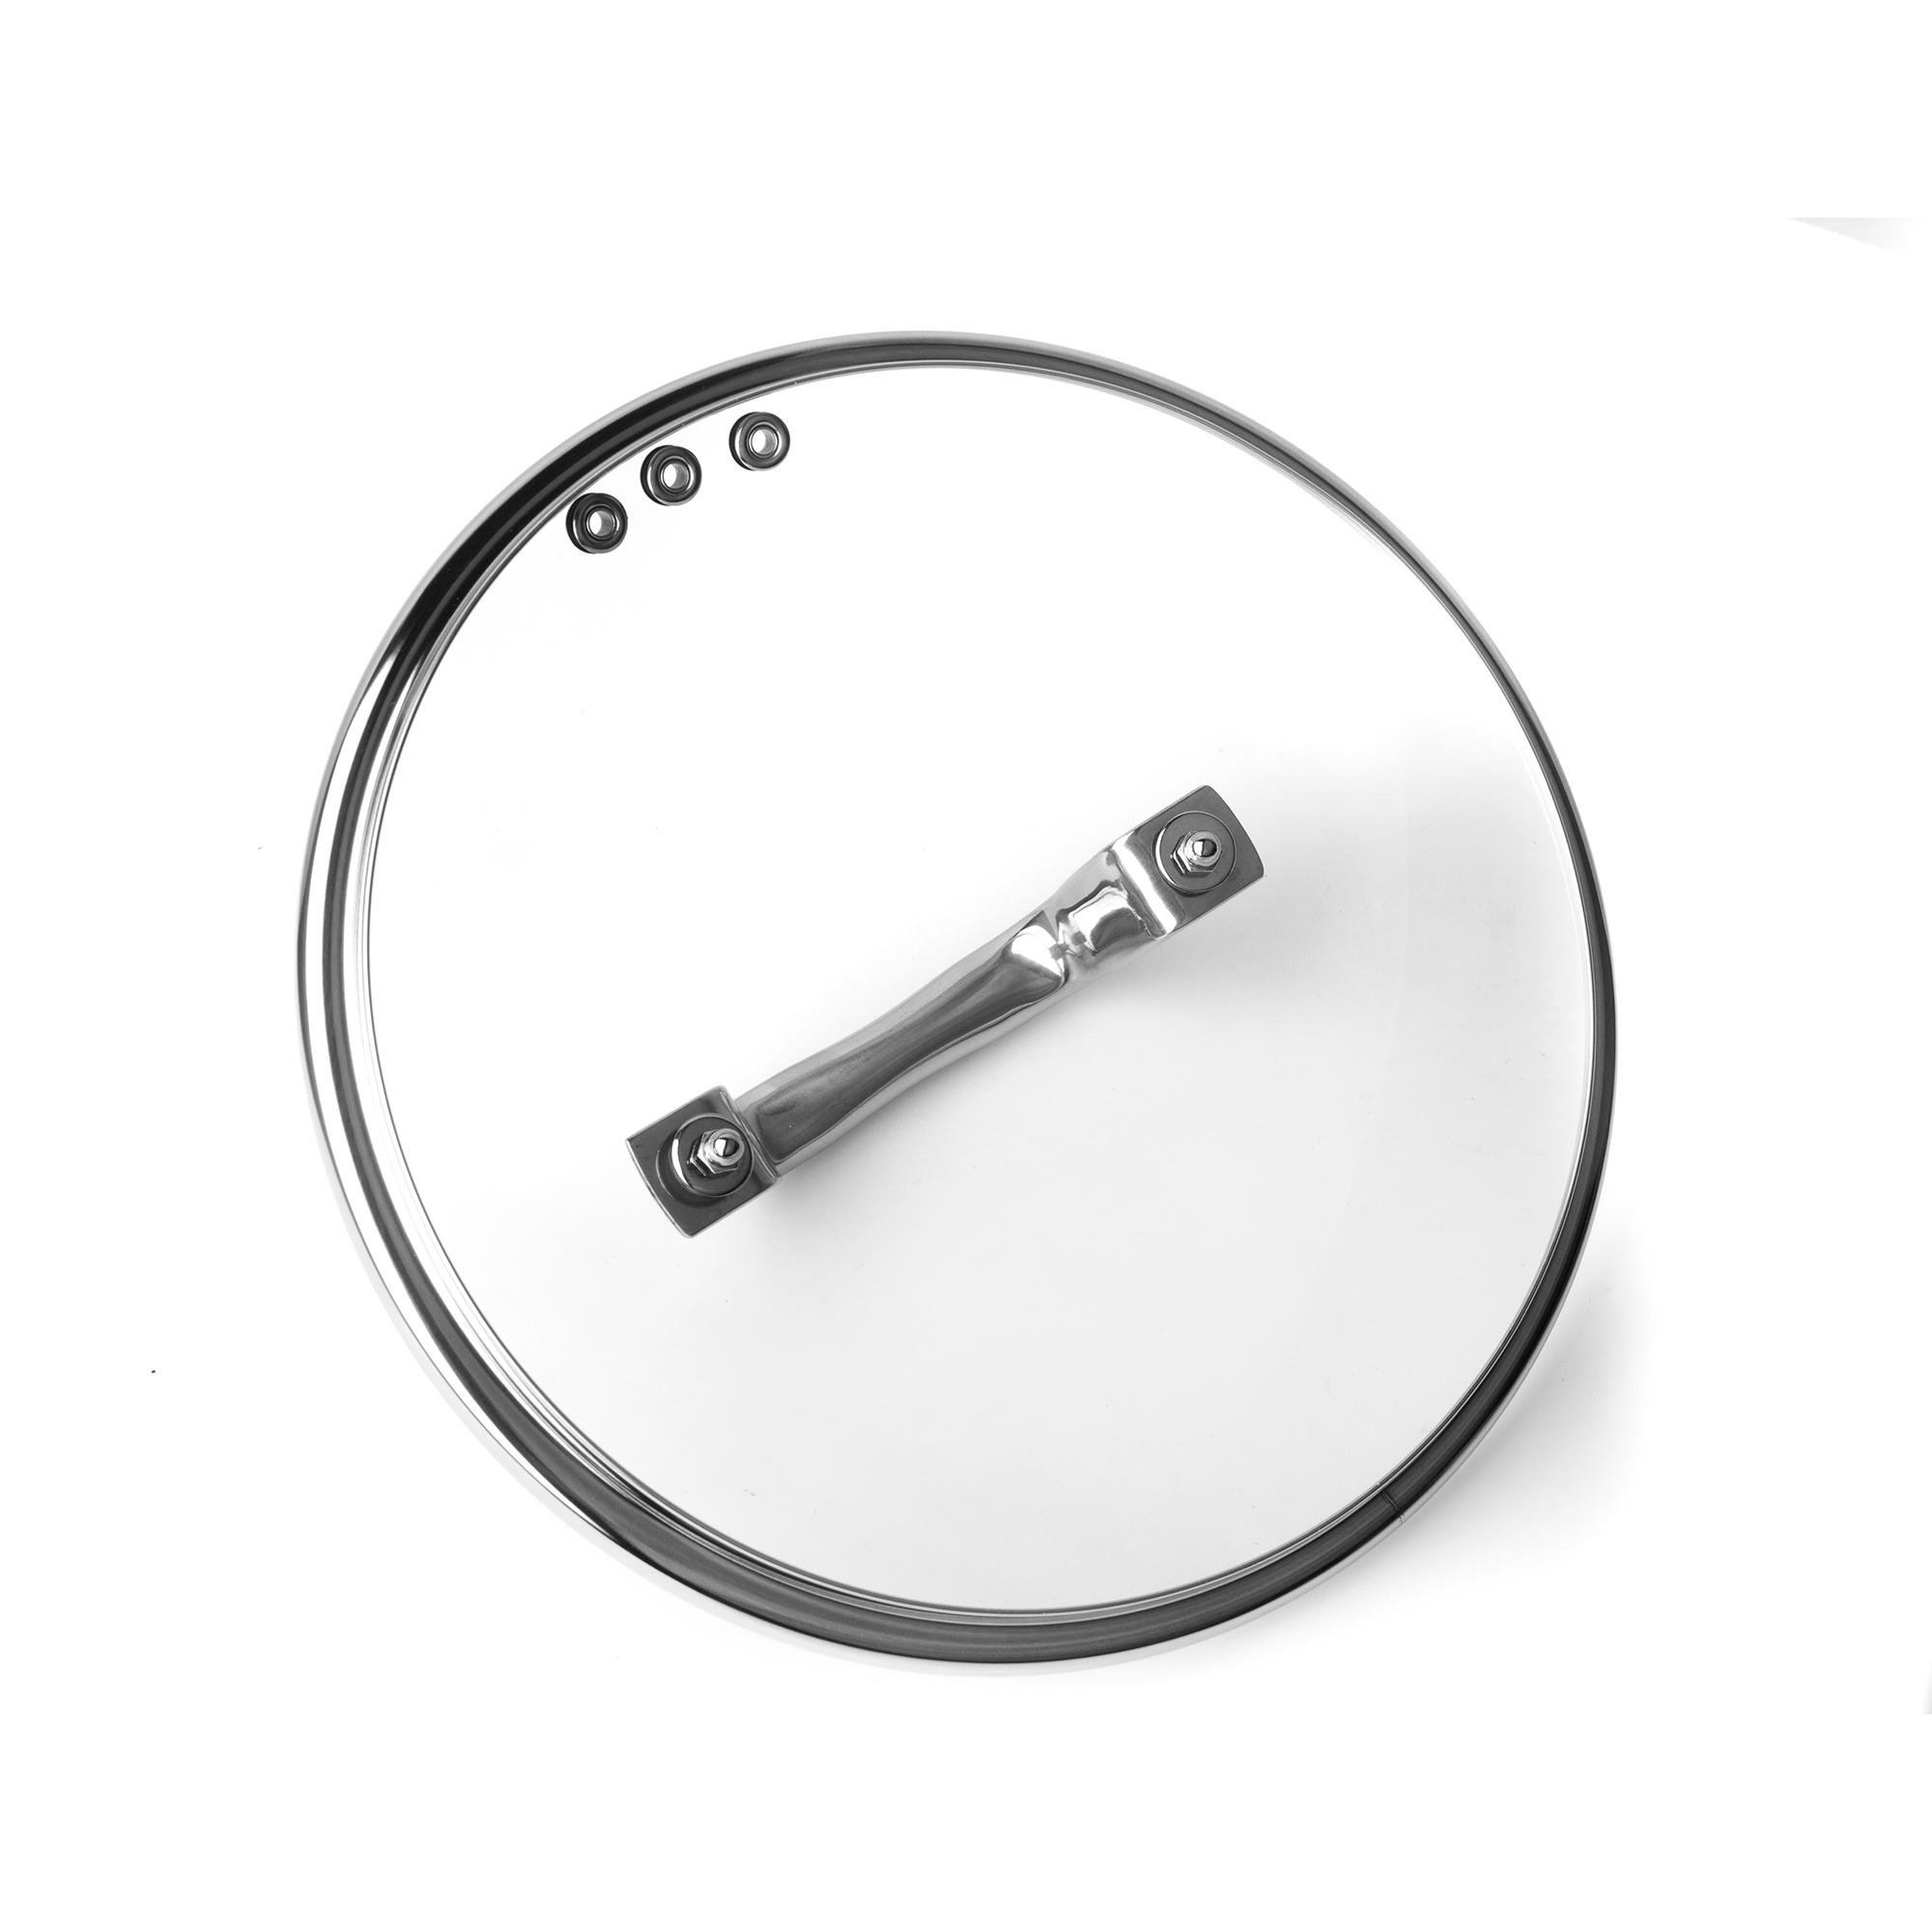 Кастрюля с крышкой Roesle Charm диаметр 20 см 2,7 л, цвет серебристый - фото 6